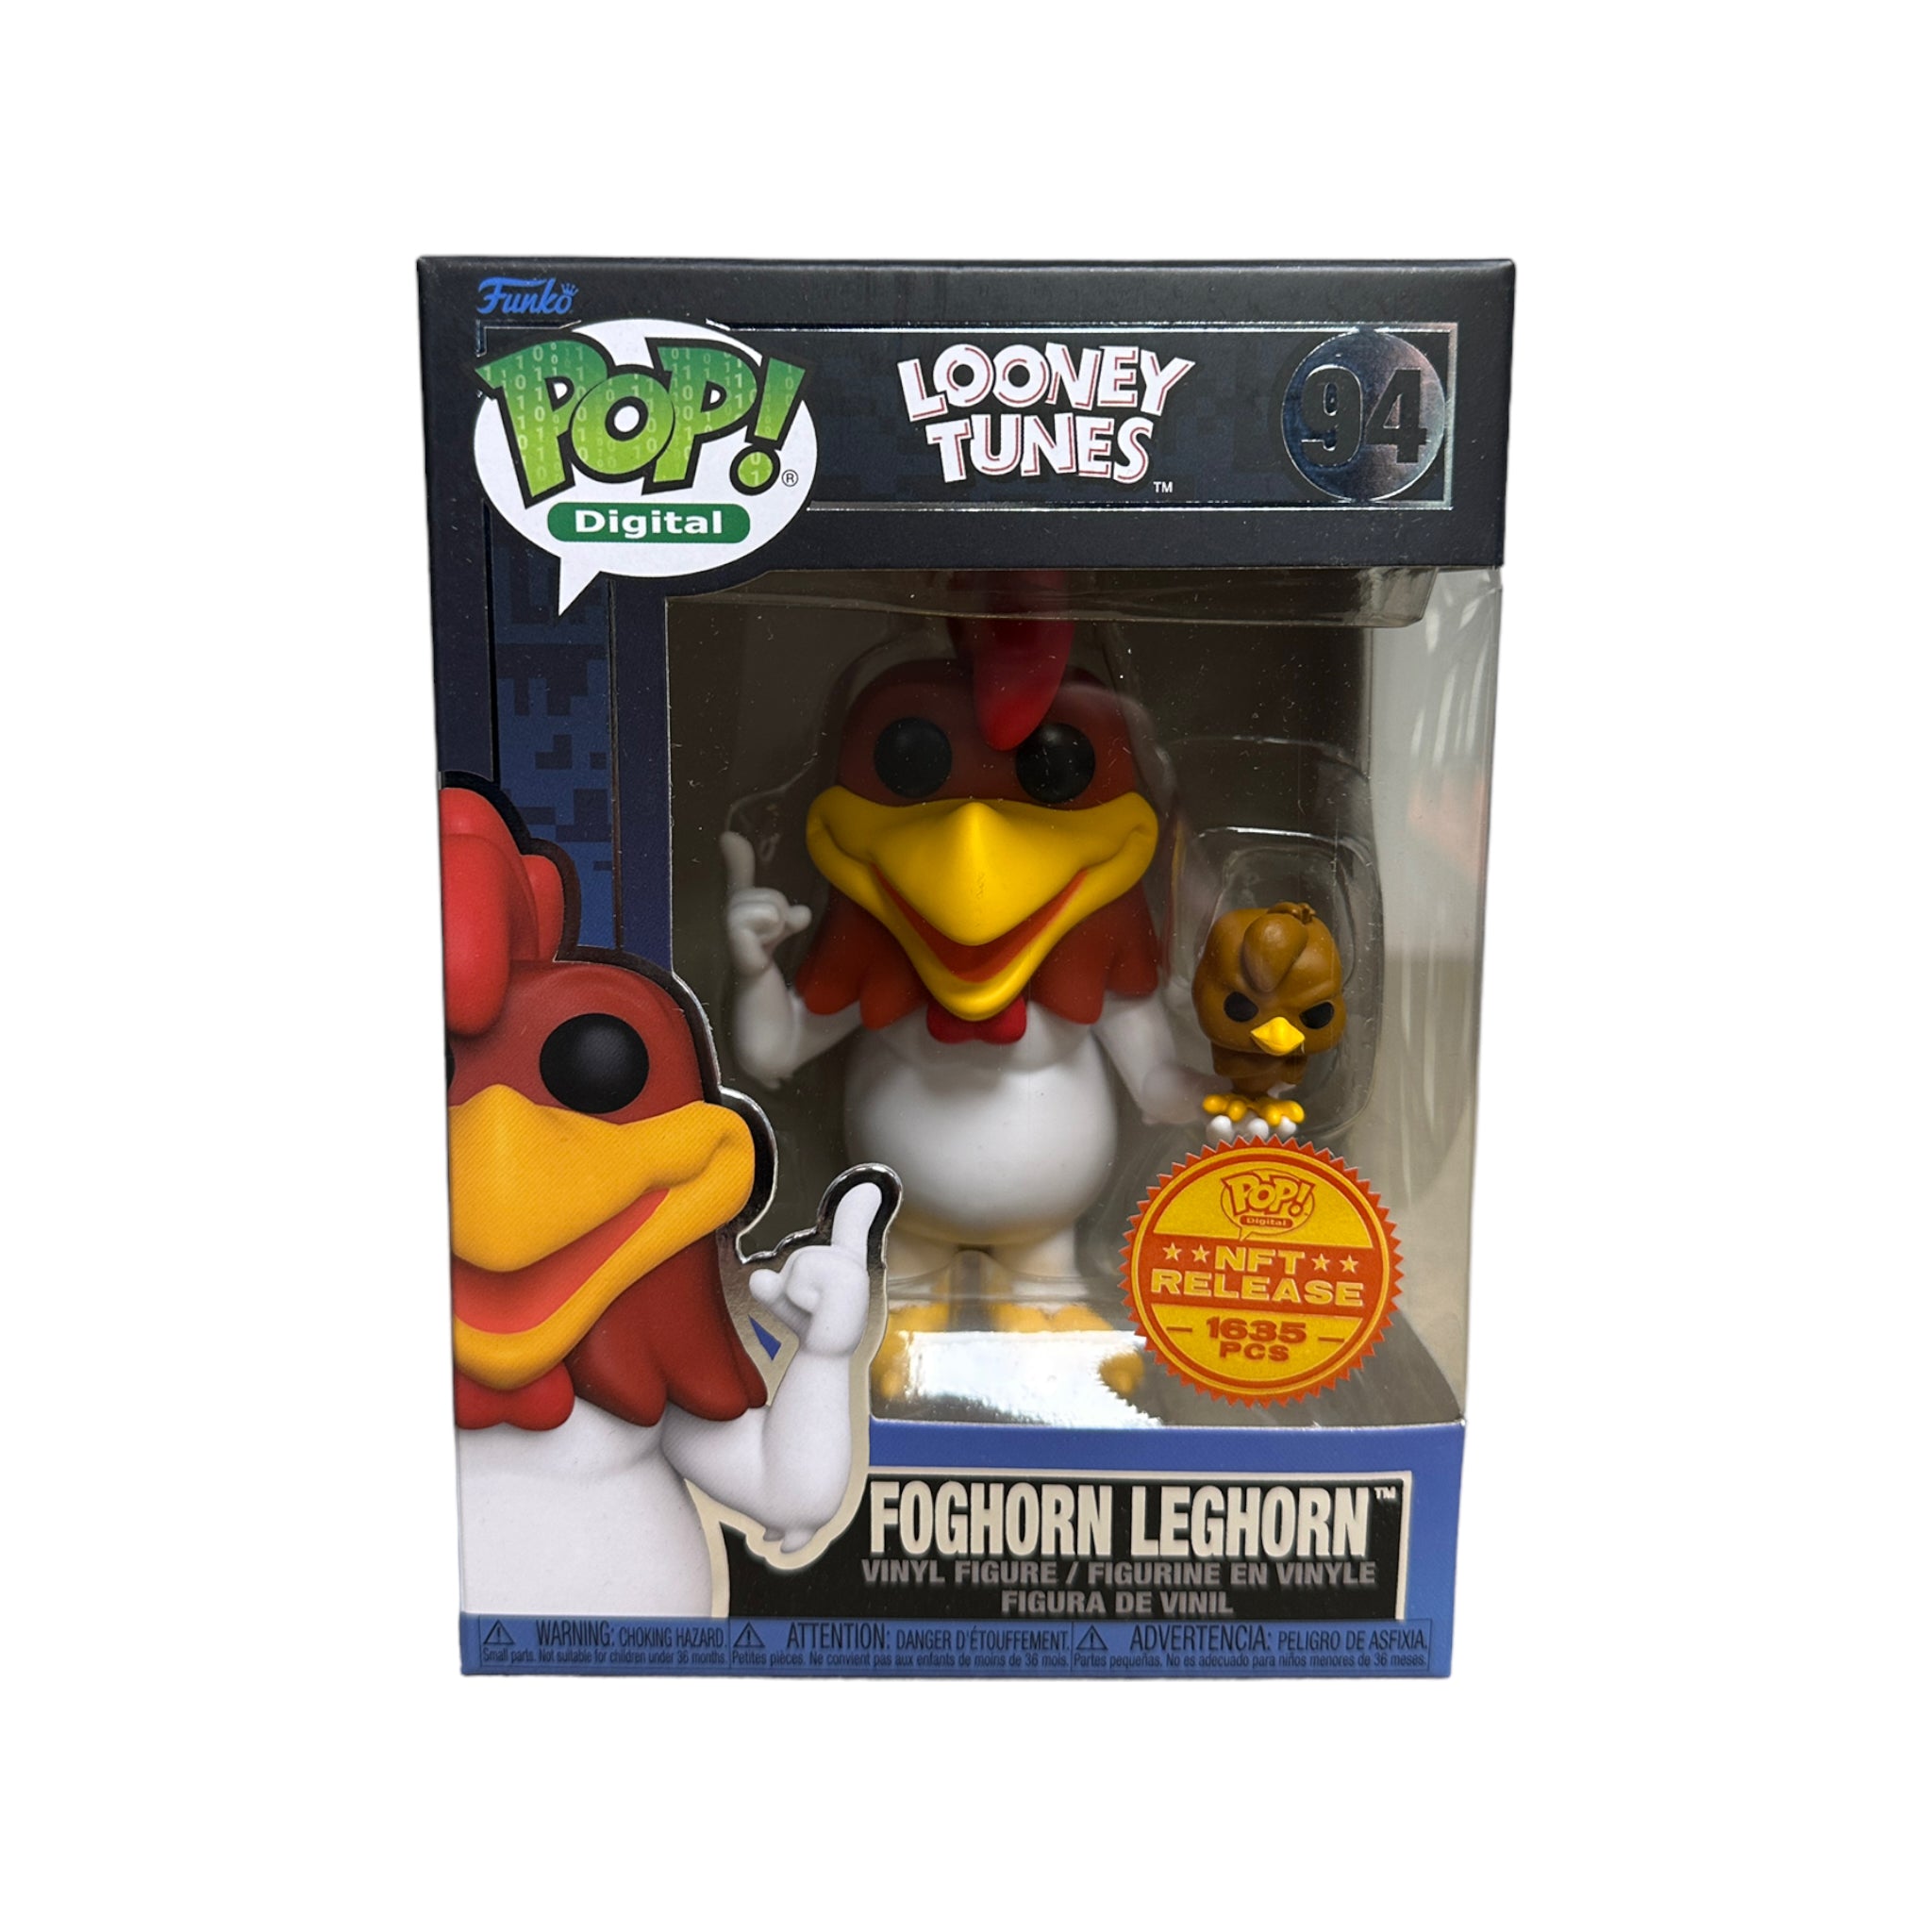 Foghorn Leghorn #94 Funko Pop! - Looney Tunes - NFT Release Exclusive LE1635 Pcs - Condition 9/10